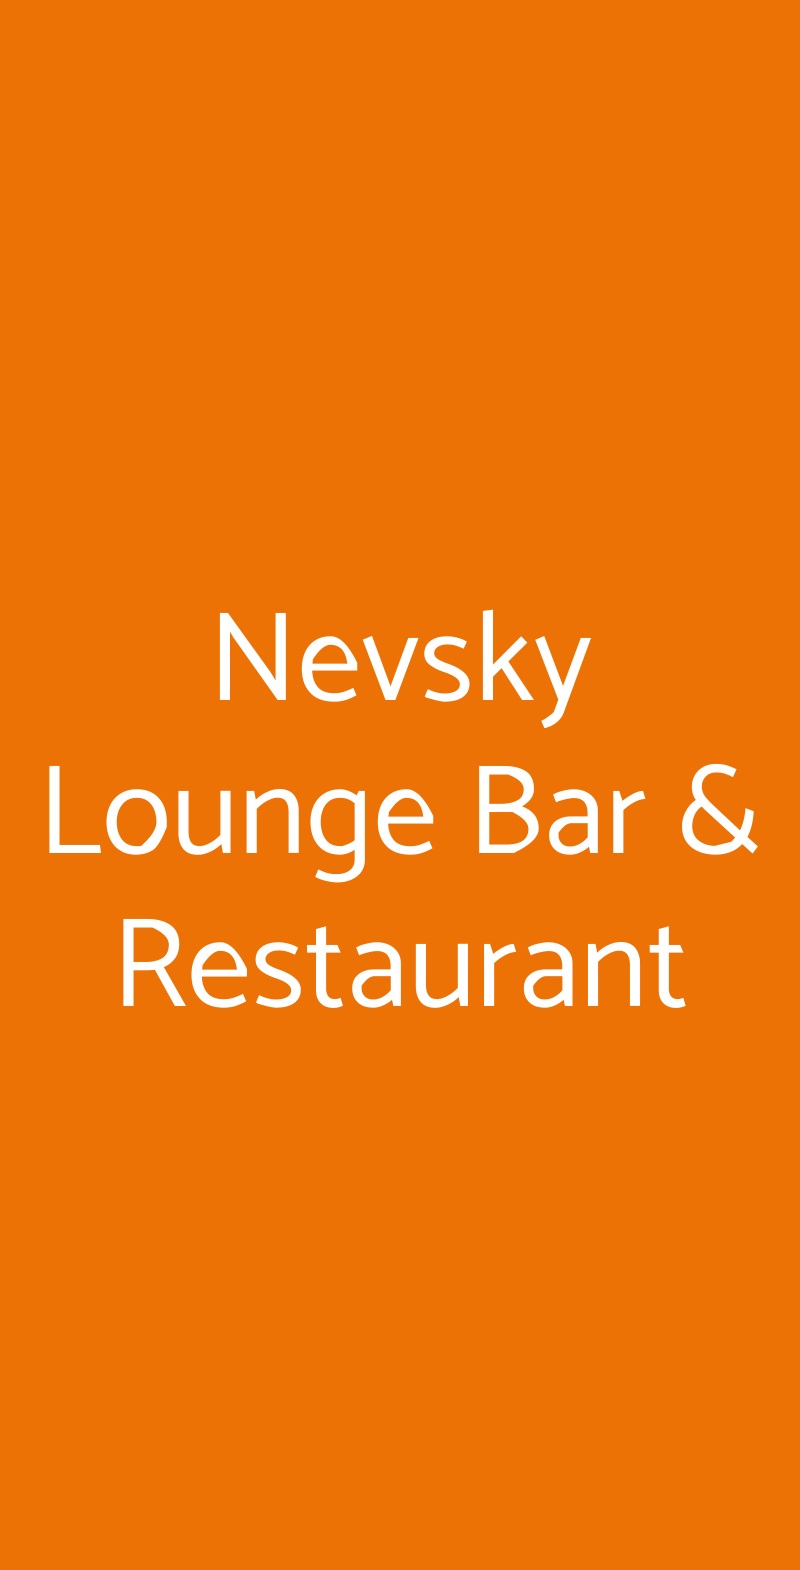 Nevsky Lounge Bar & Restaurant Milano menù 1 pagina